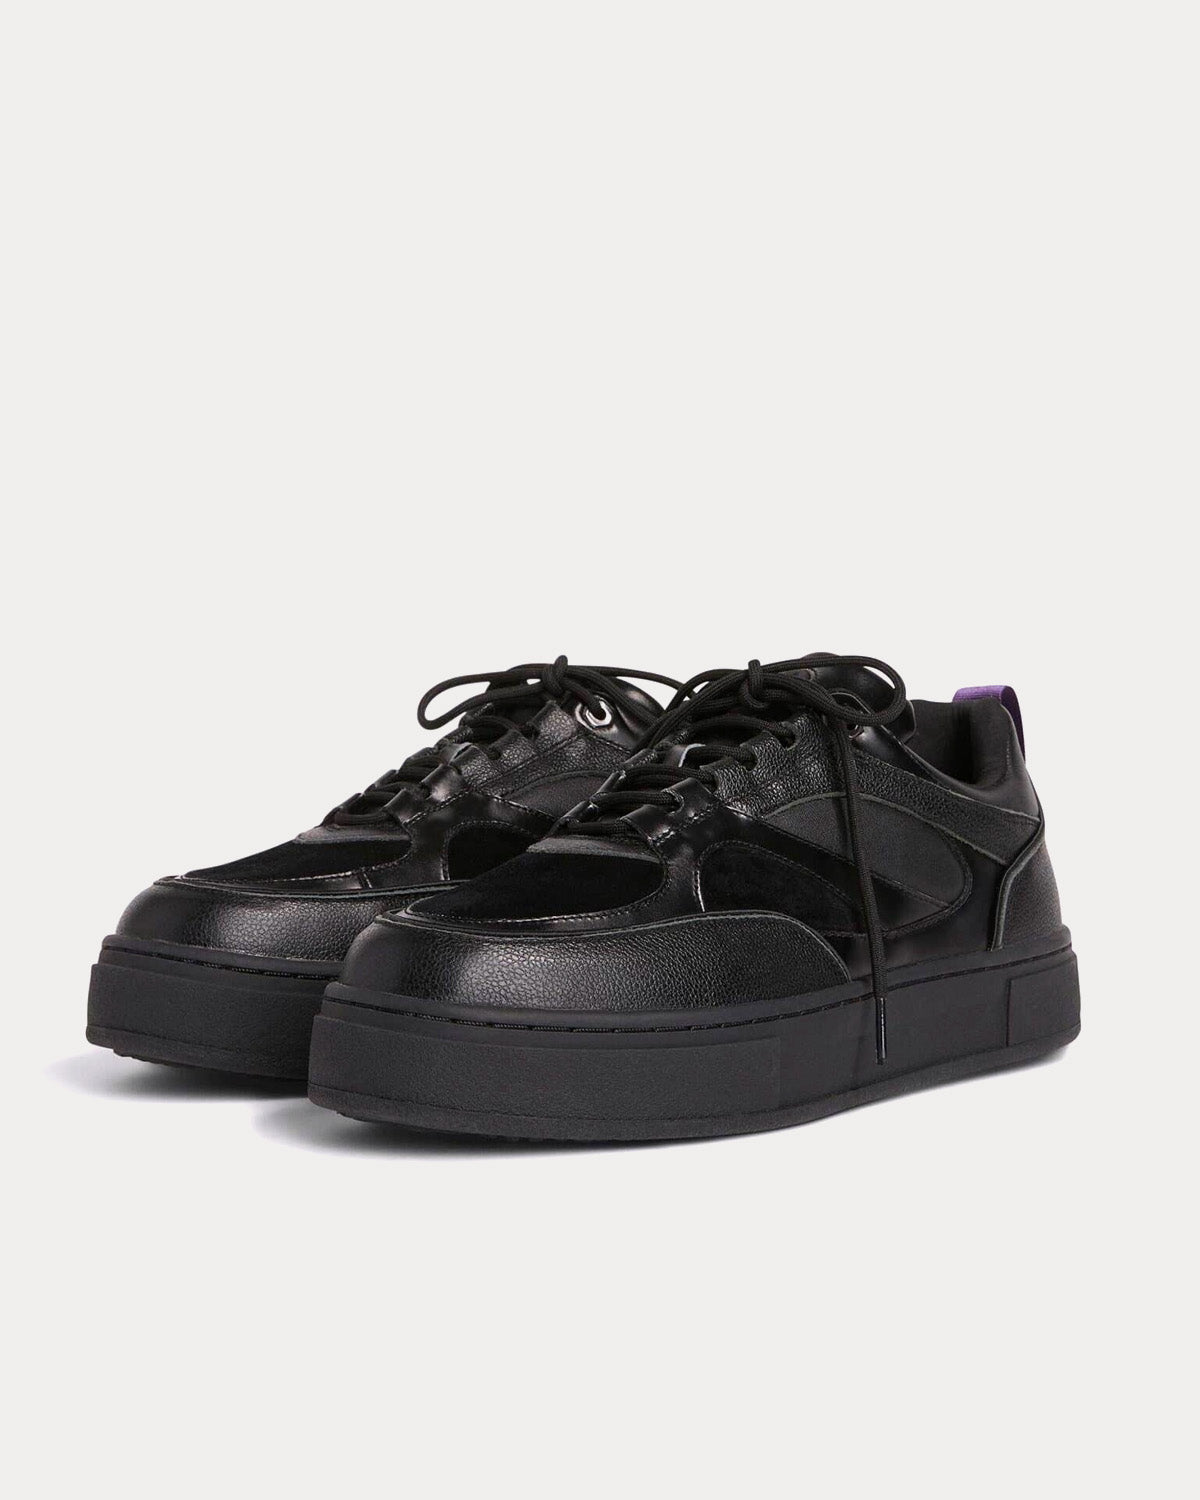 Eytys - Sidney Leather Black / Black Low Top Sneakers